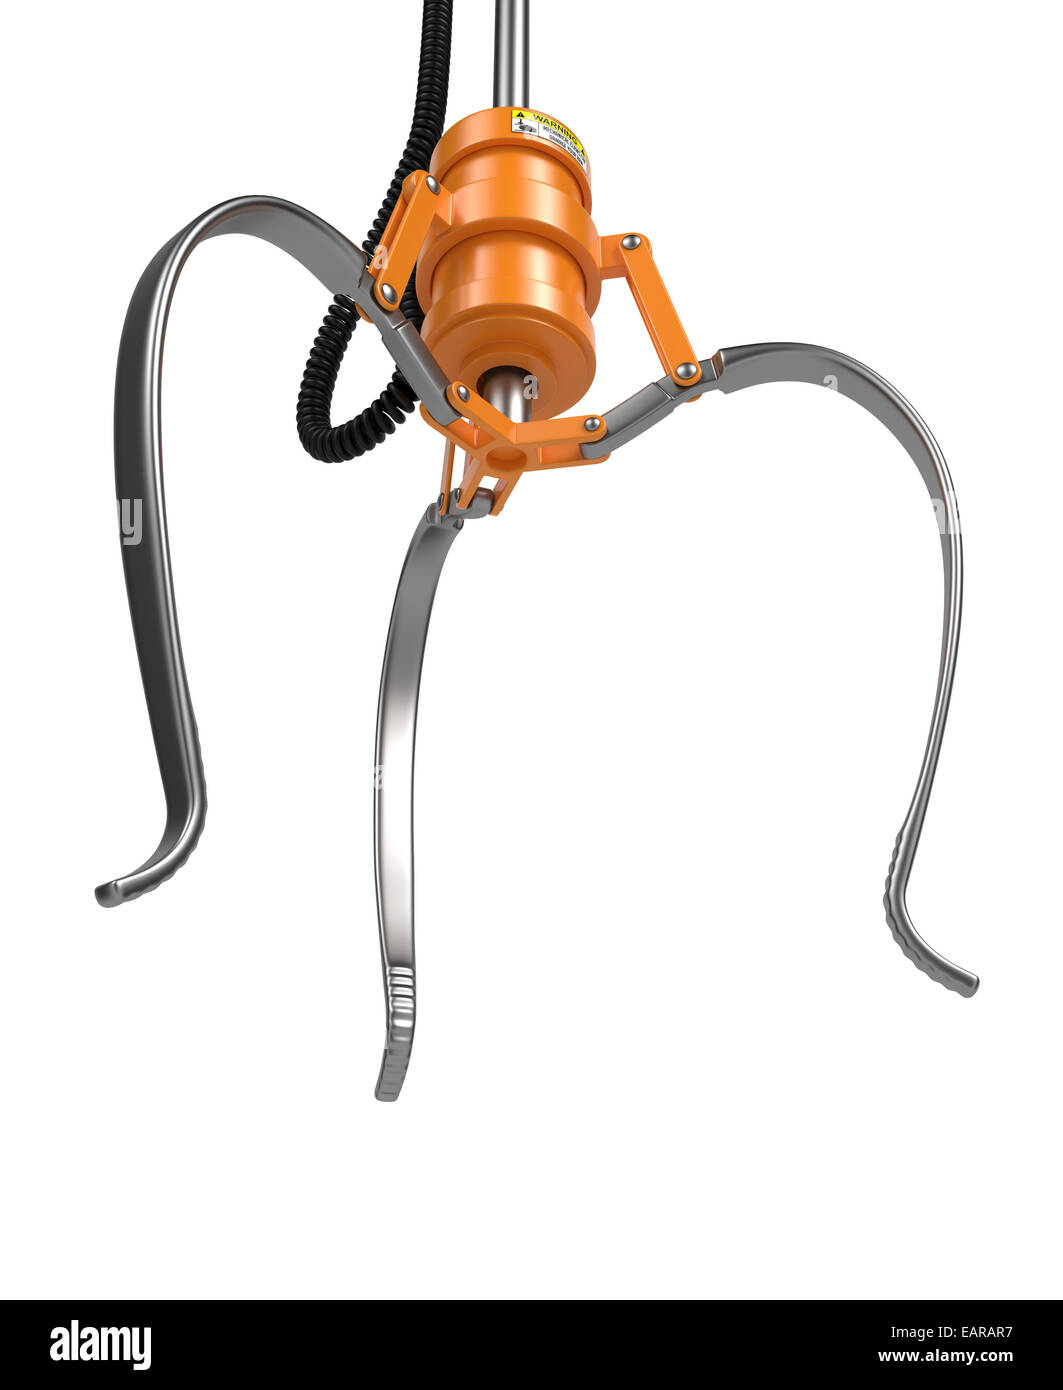 Open Metal Robotic Claw in Orange Color. Stock Photo